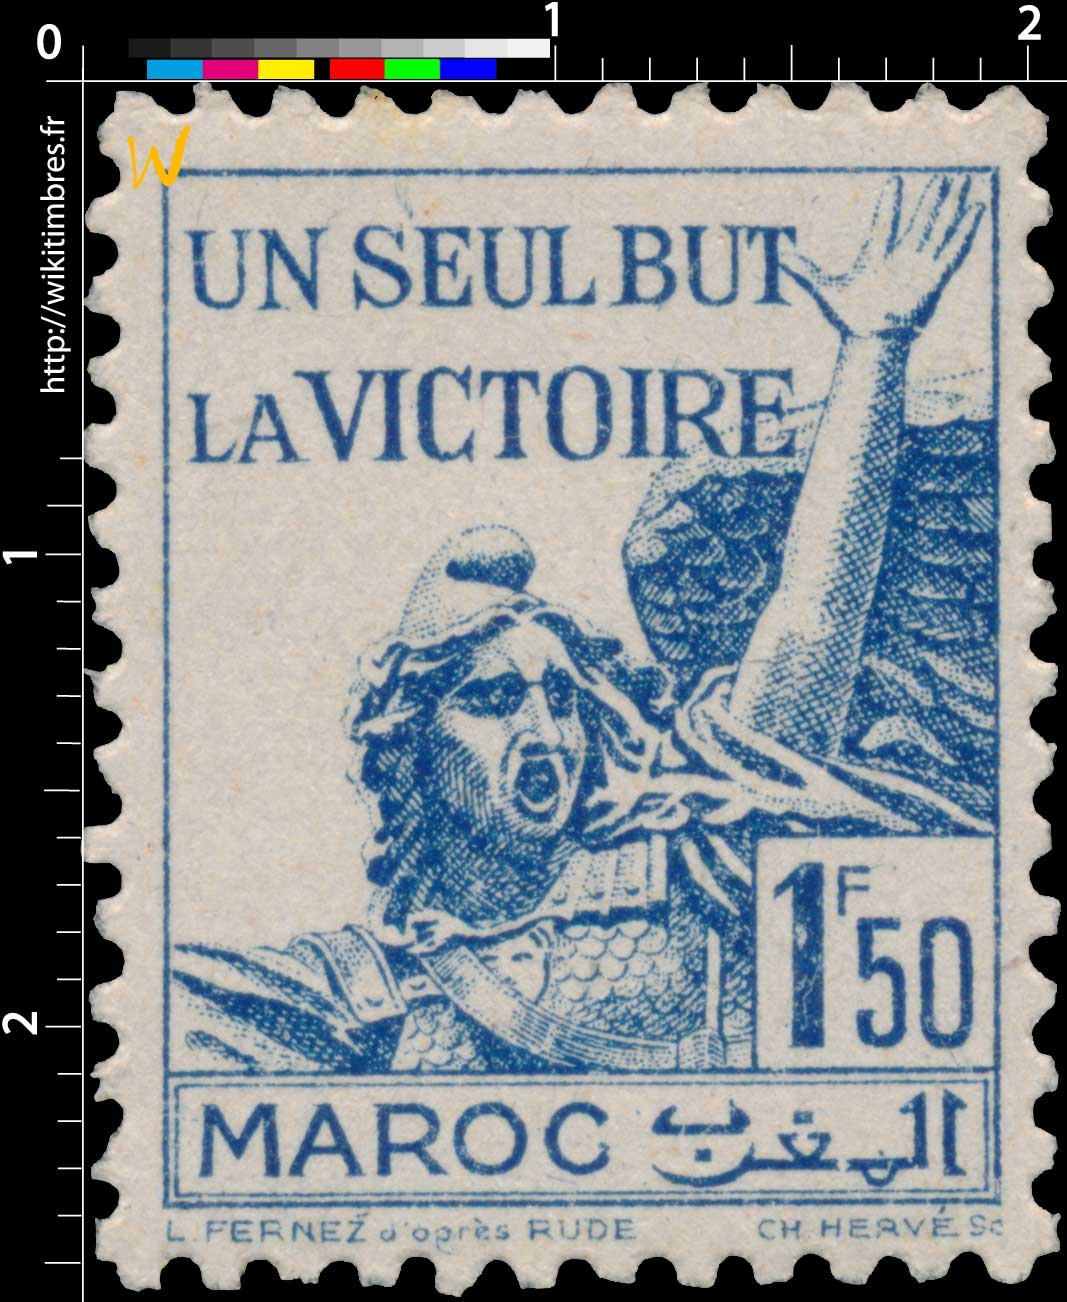 1943 Maroc - La Marseillaise